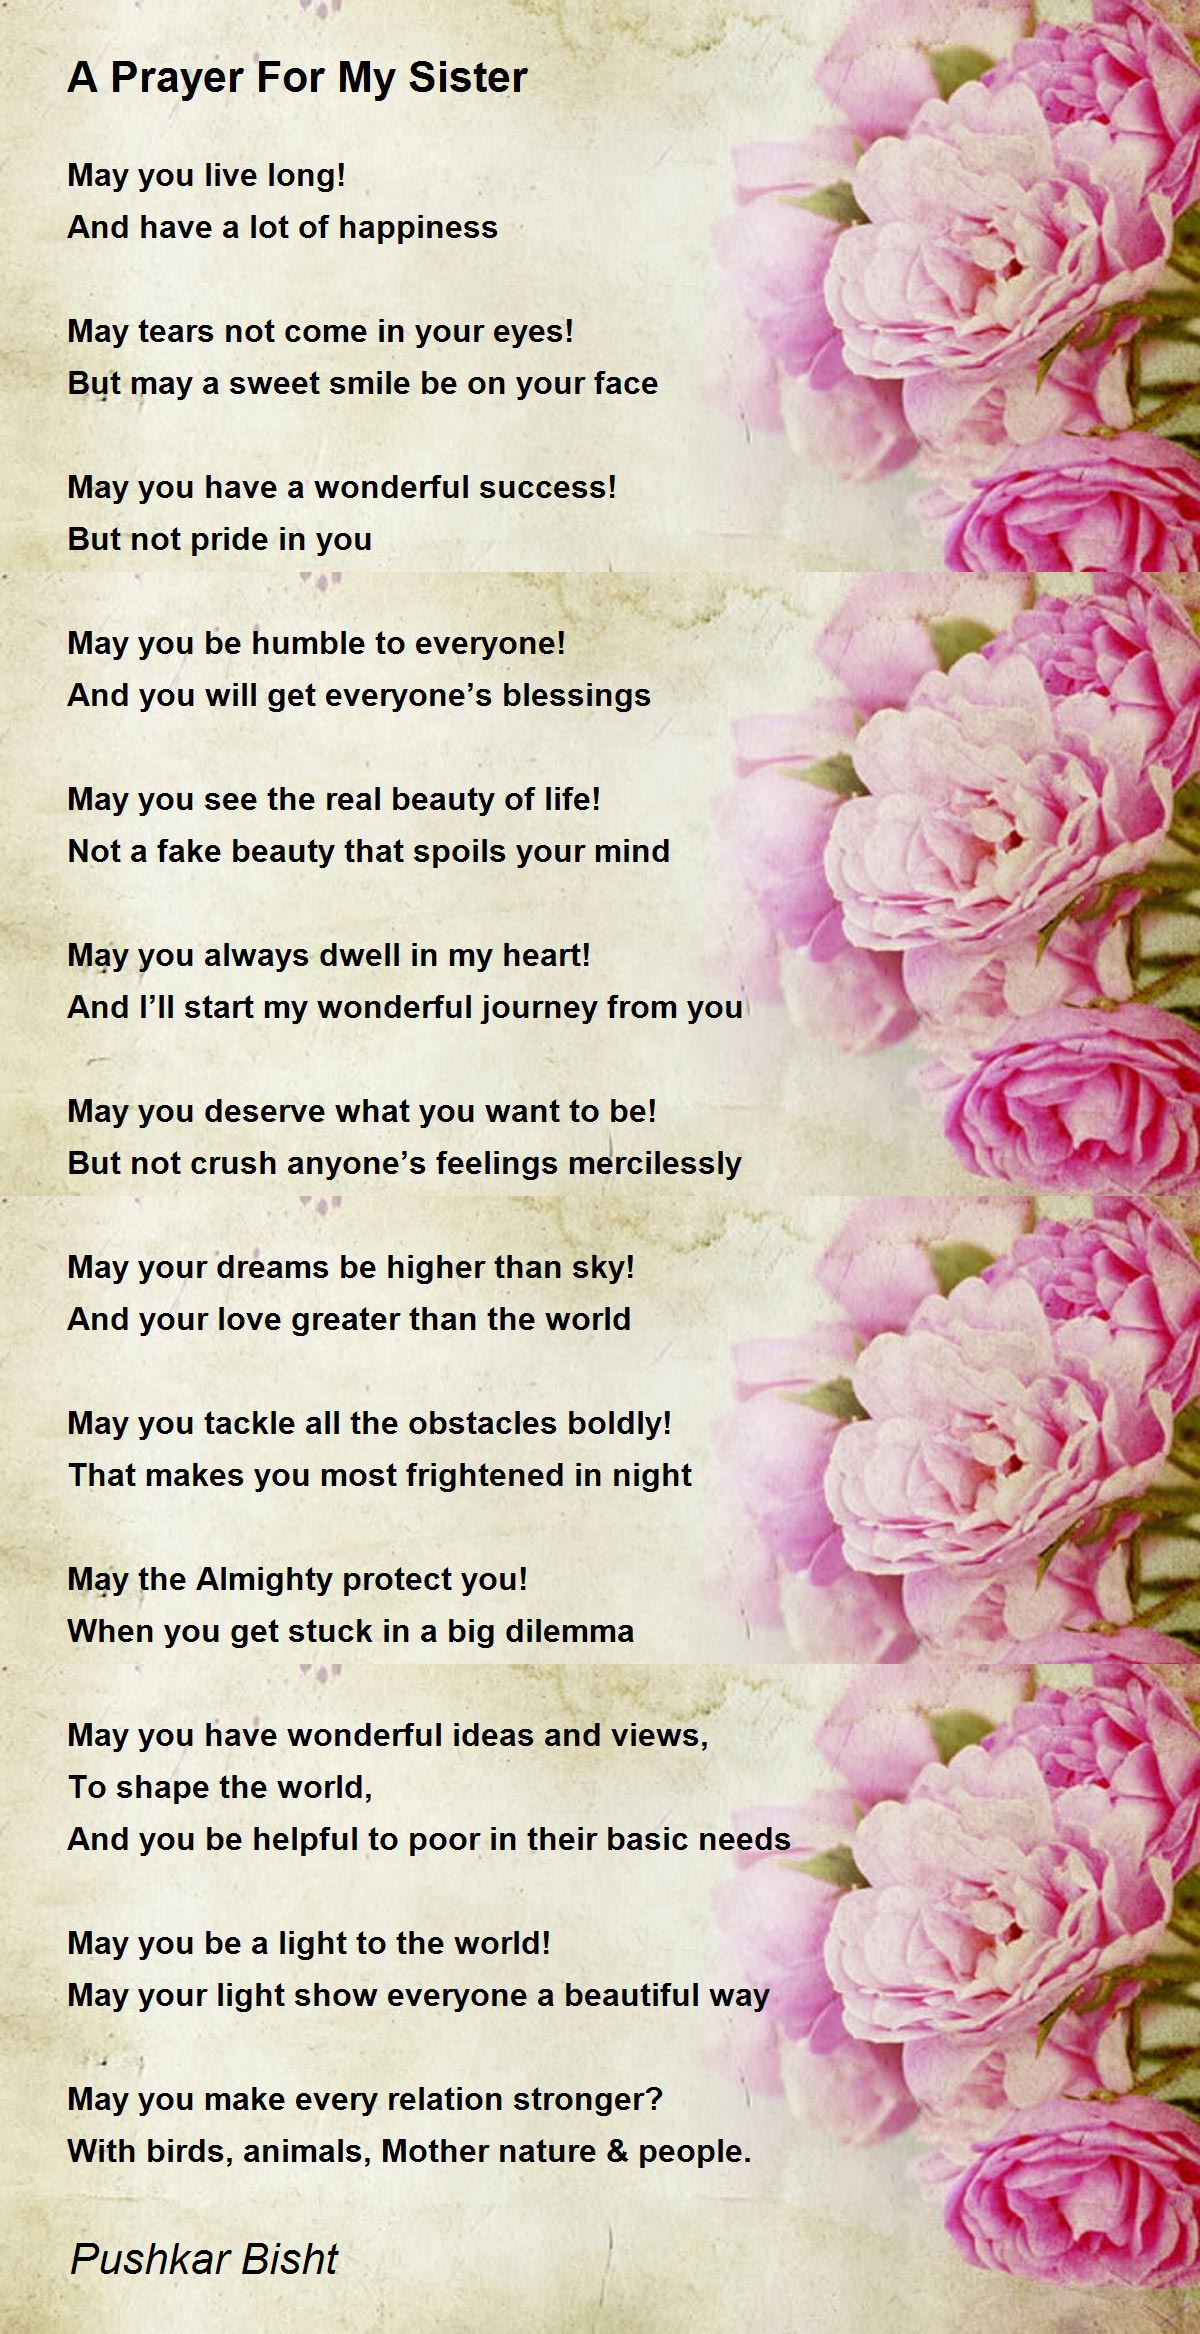 A Prayer For My Sister Poem